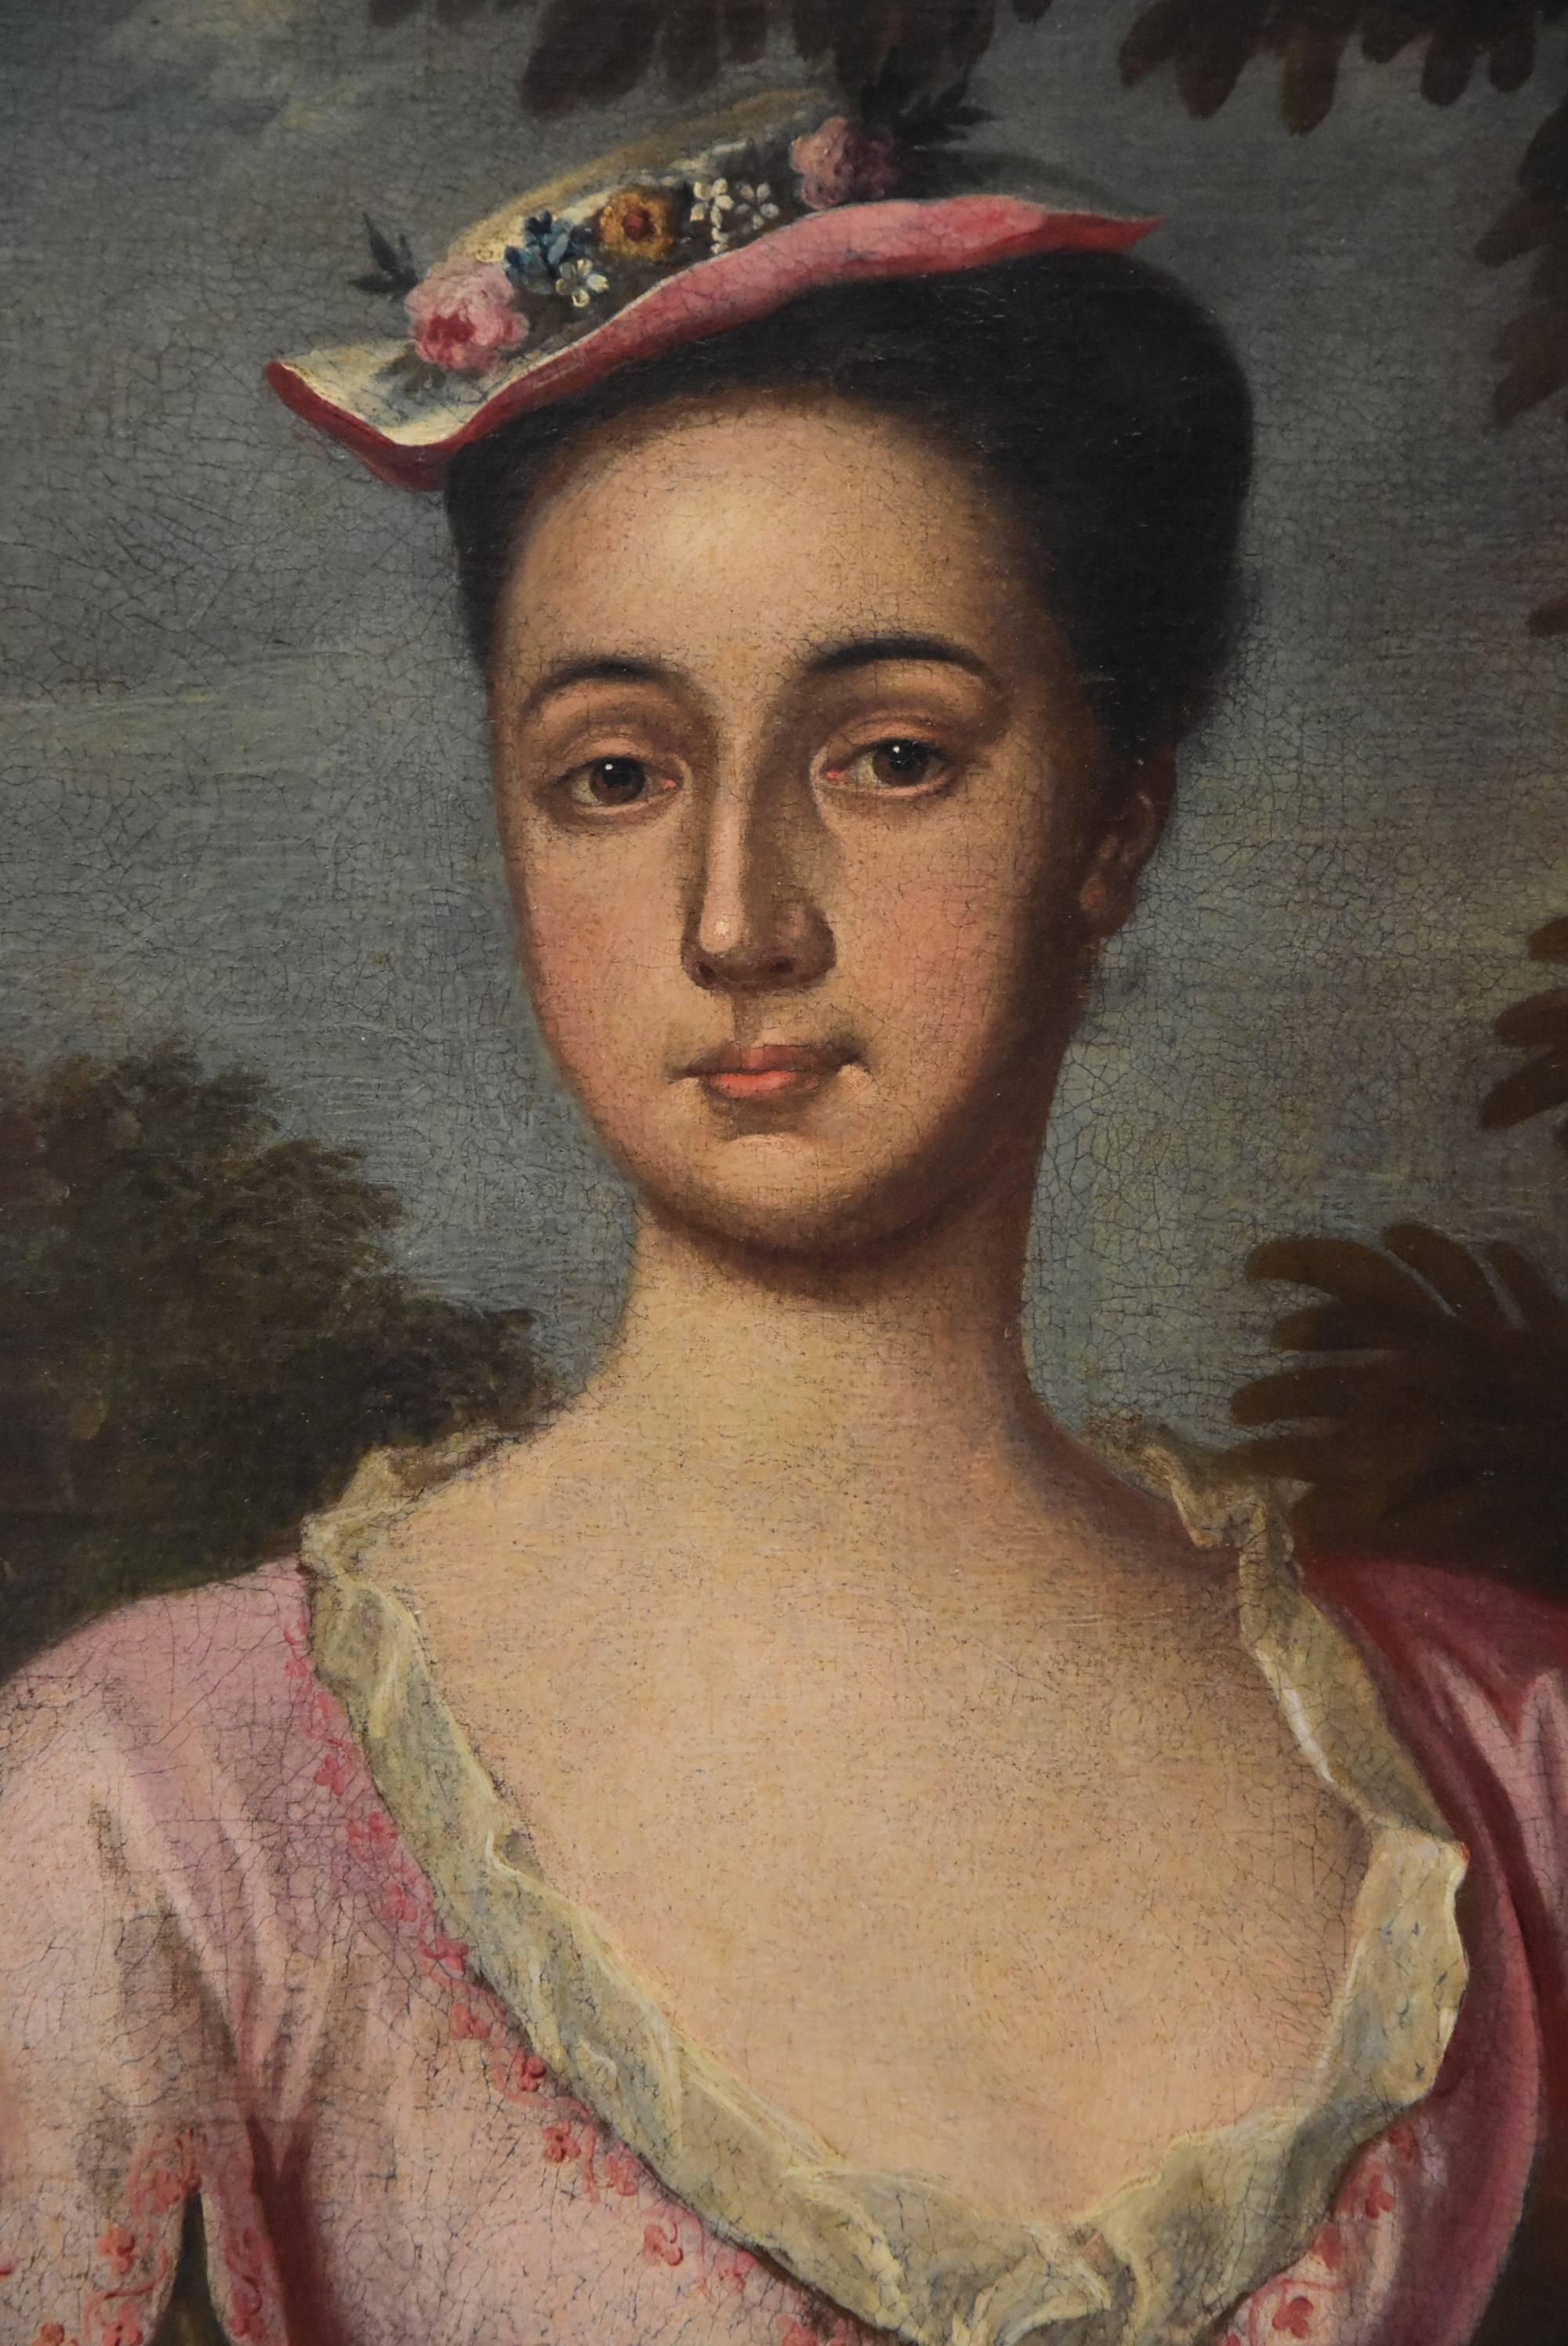 18th century woman portrait